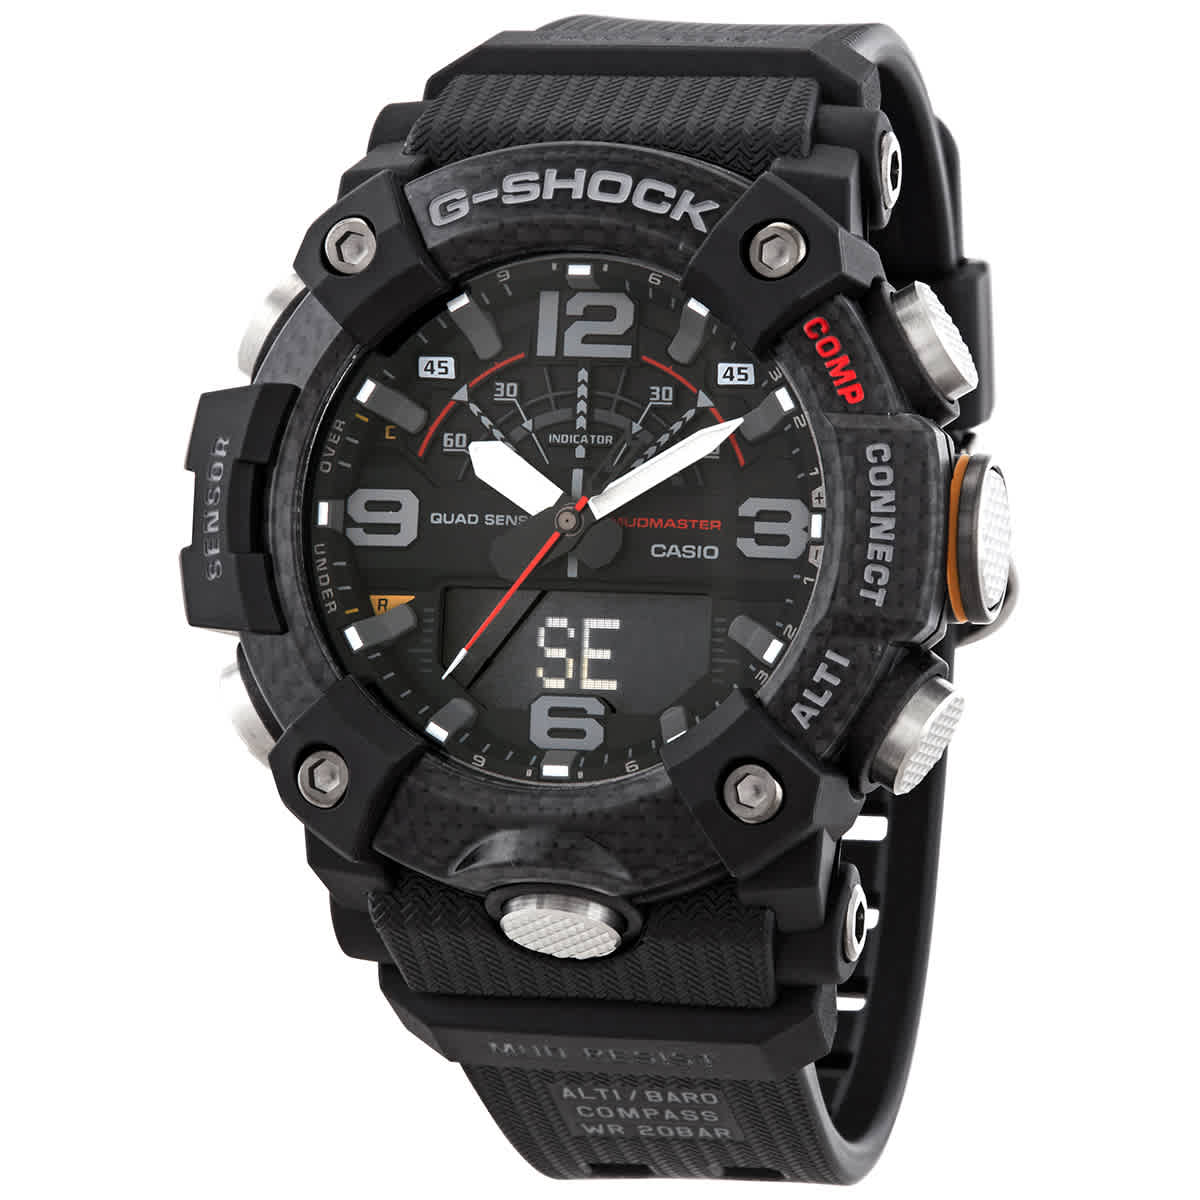 Casio G-shock Perpetual Alarm World Time Chronograph Quartz Analog ...